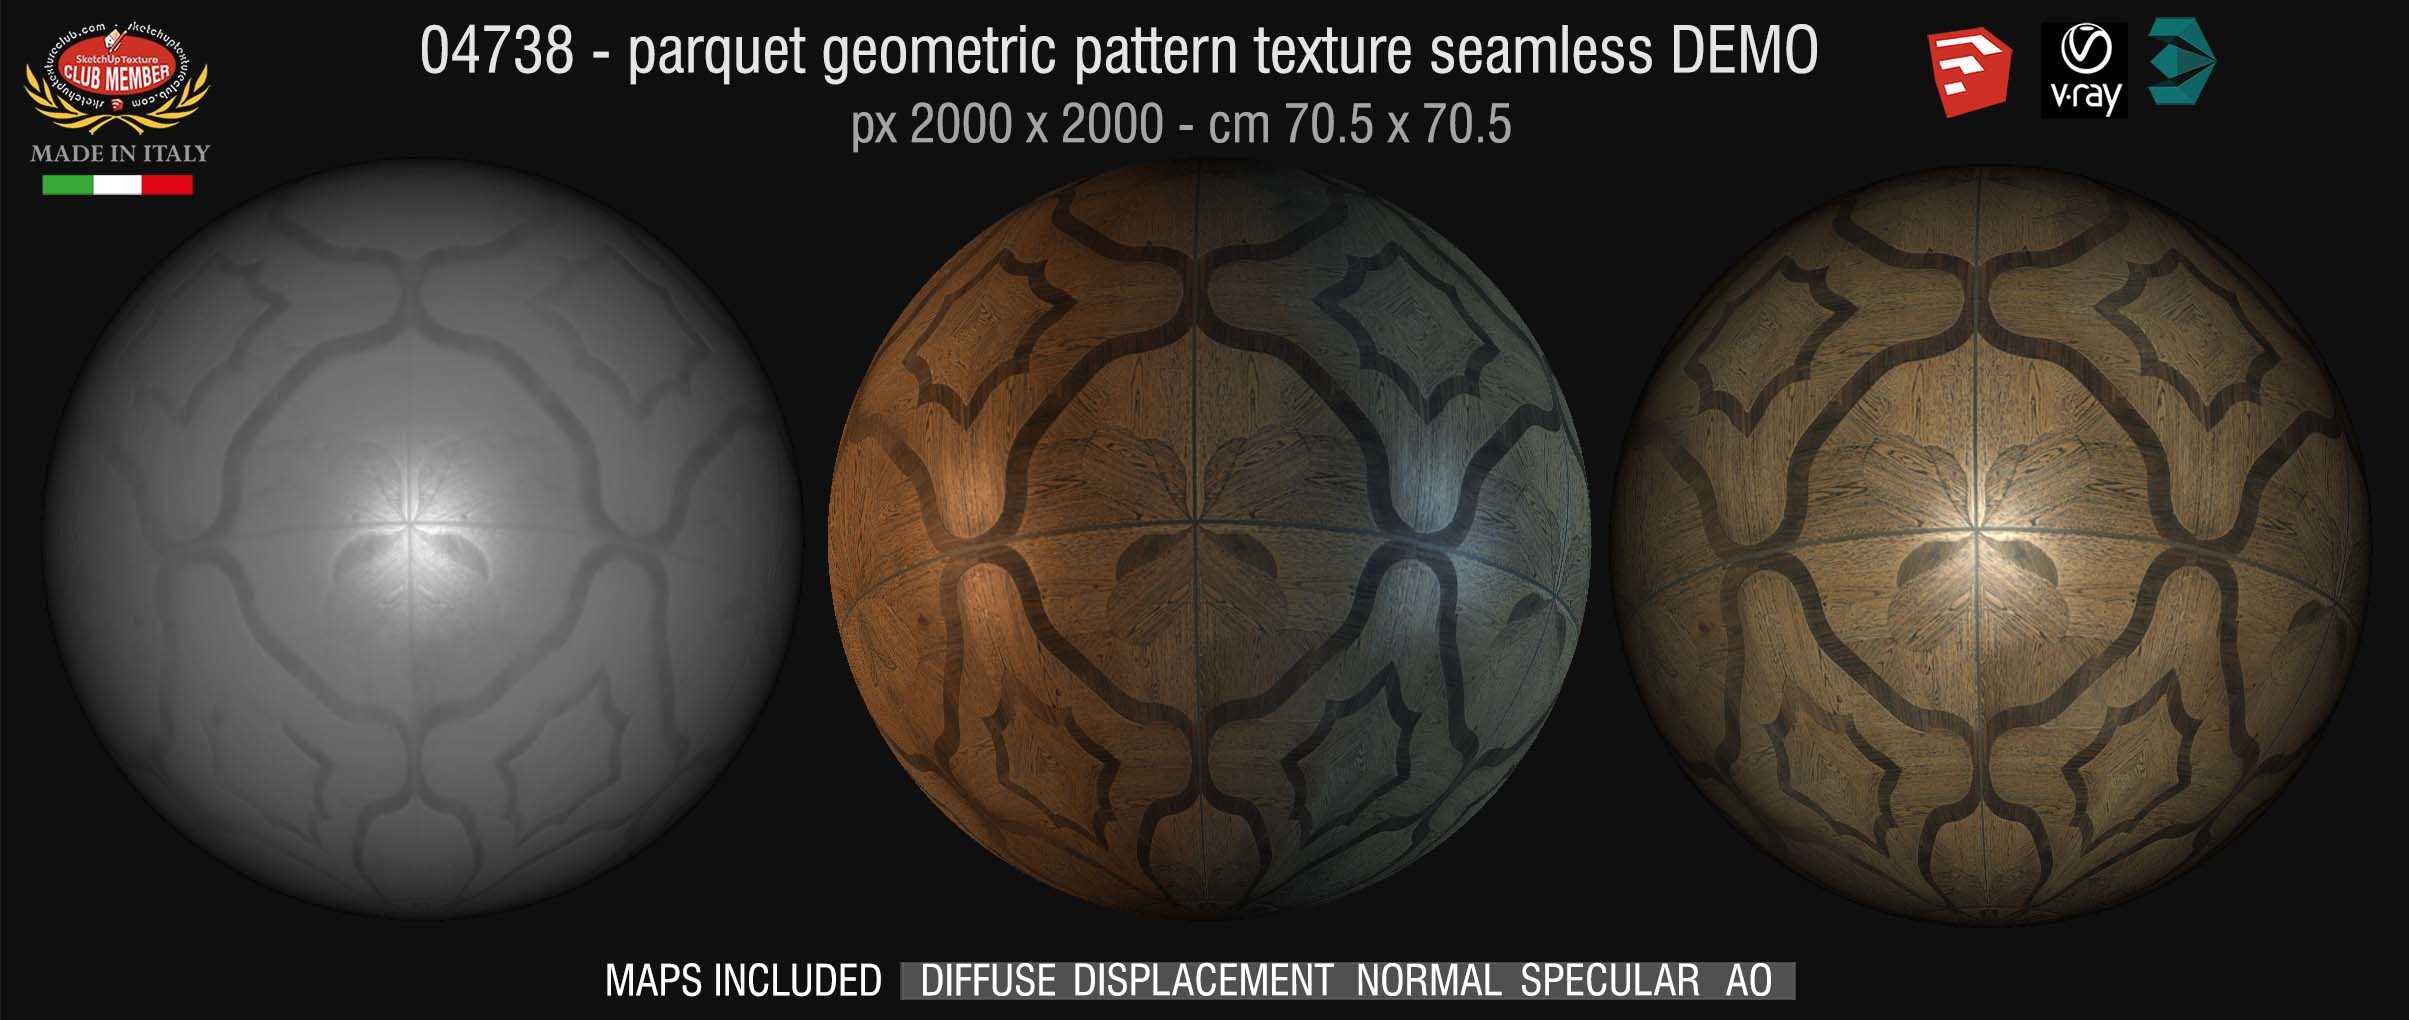 04738 HR Parquet geometric pattern texture seamless + maps DEMO